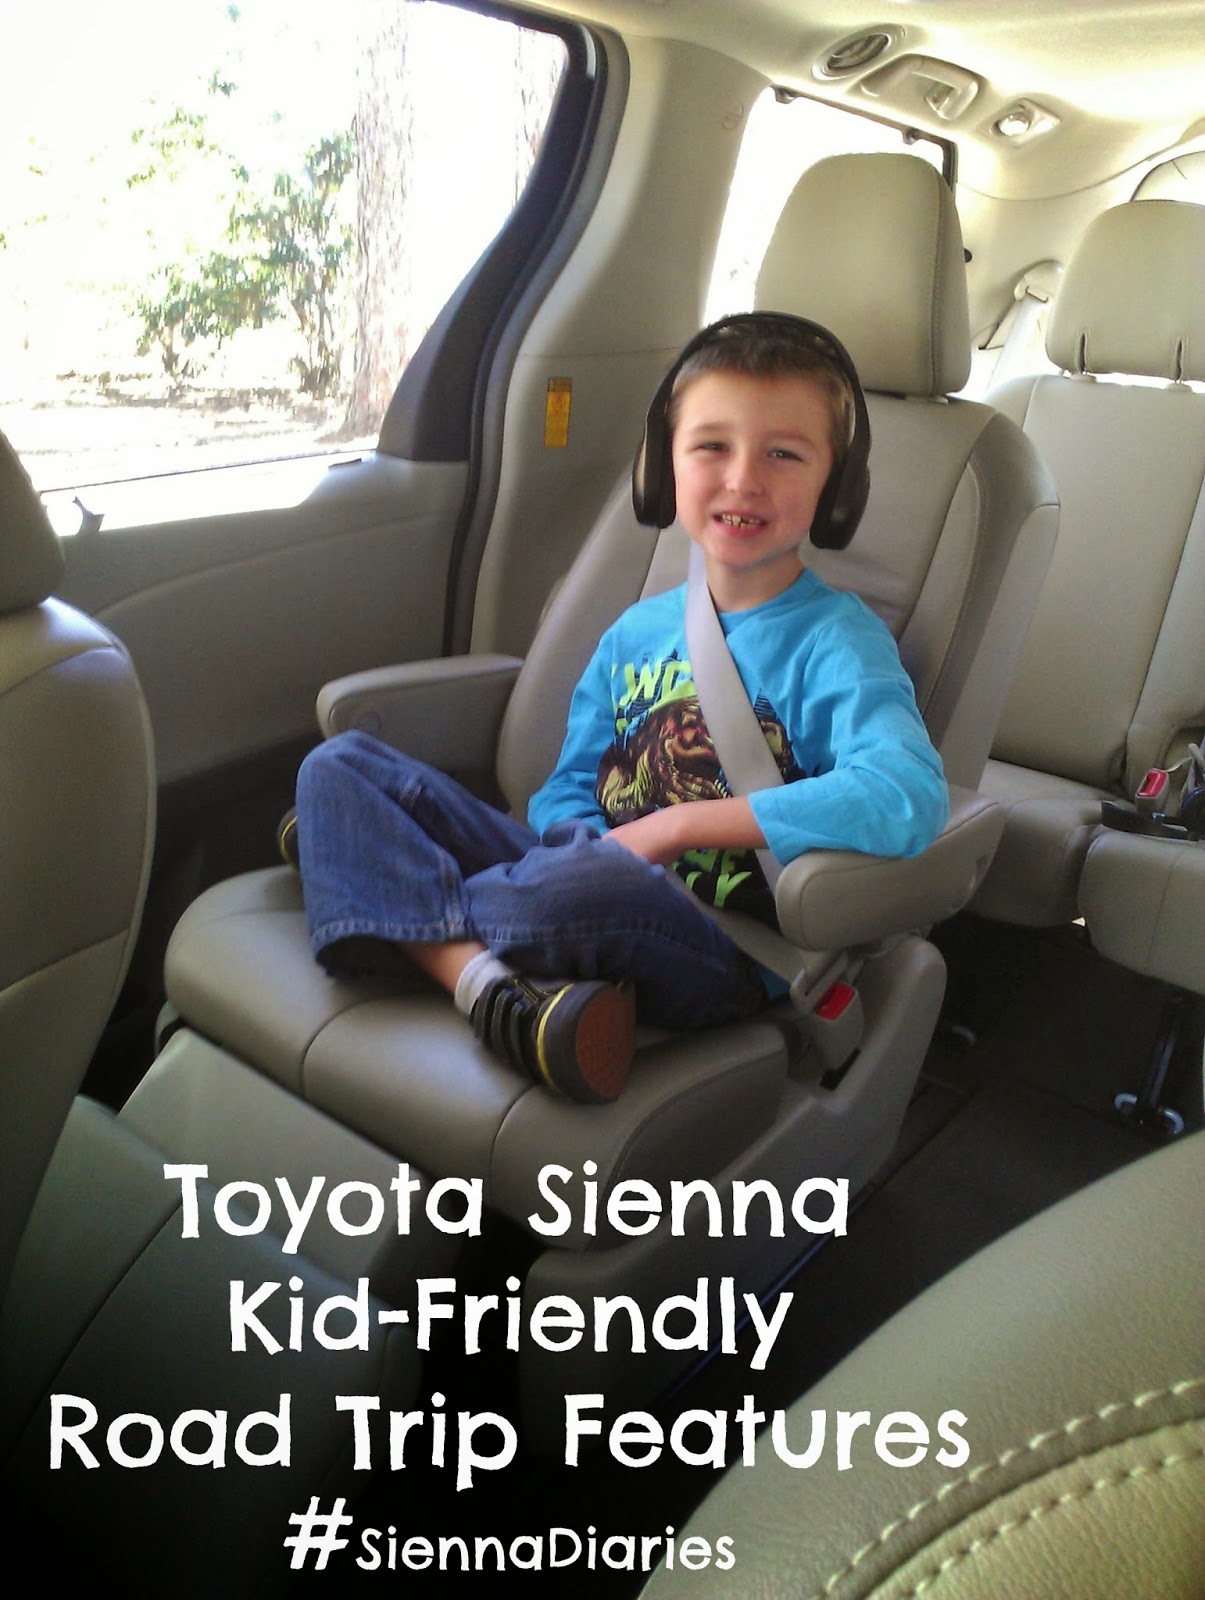 Kid-friendly features of the Toyota Sienna. #SiennaDiaries